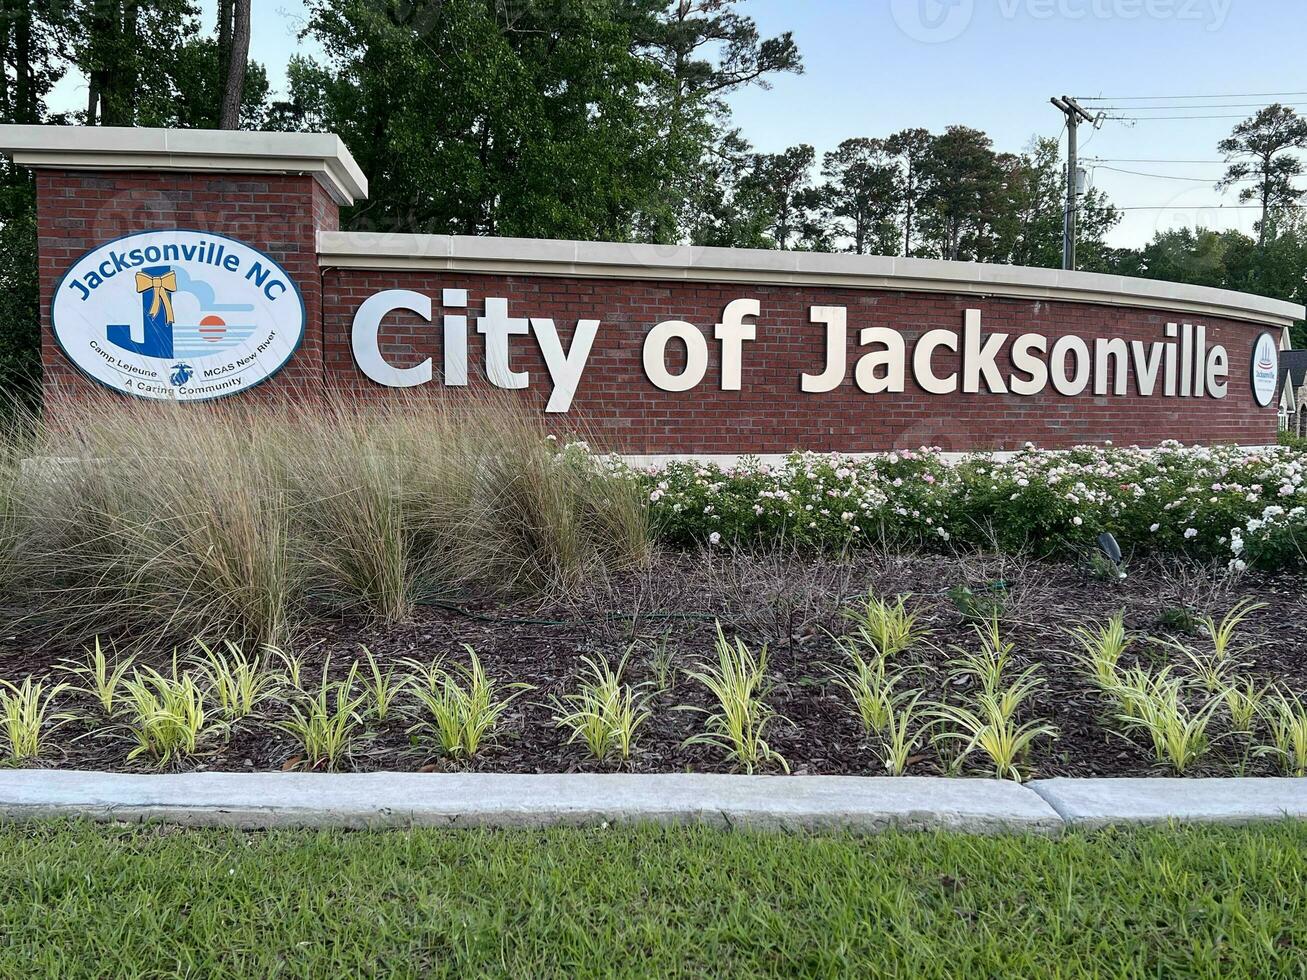 Jacksonville North Carolina photo